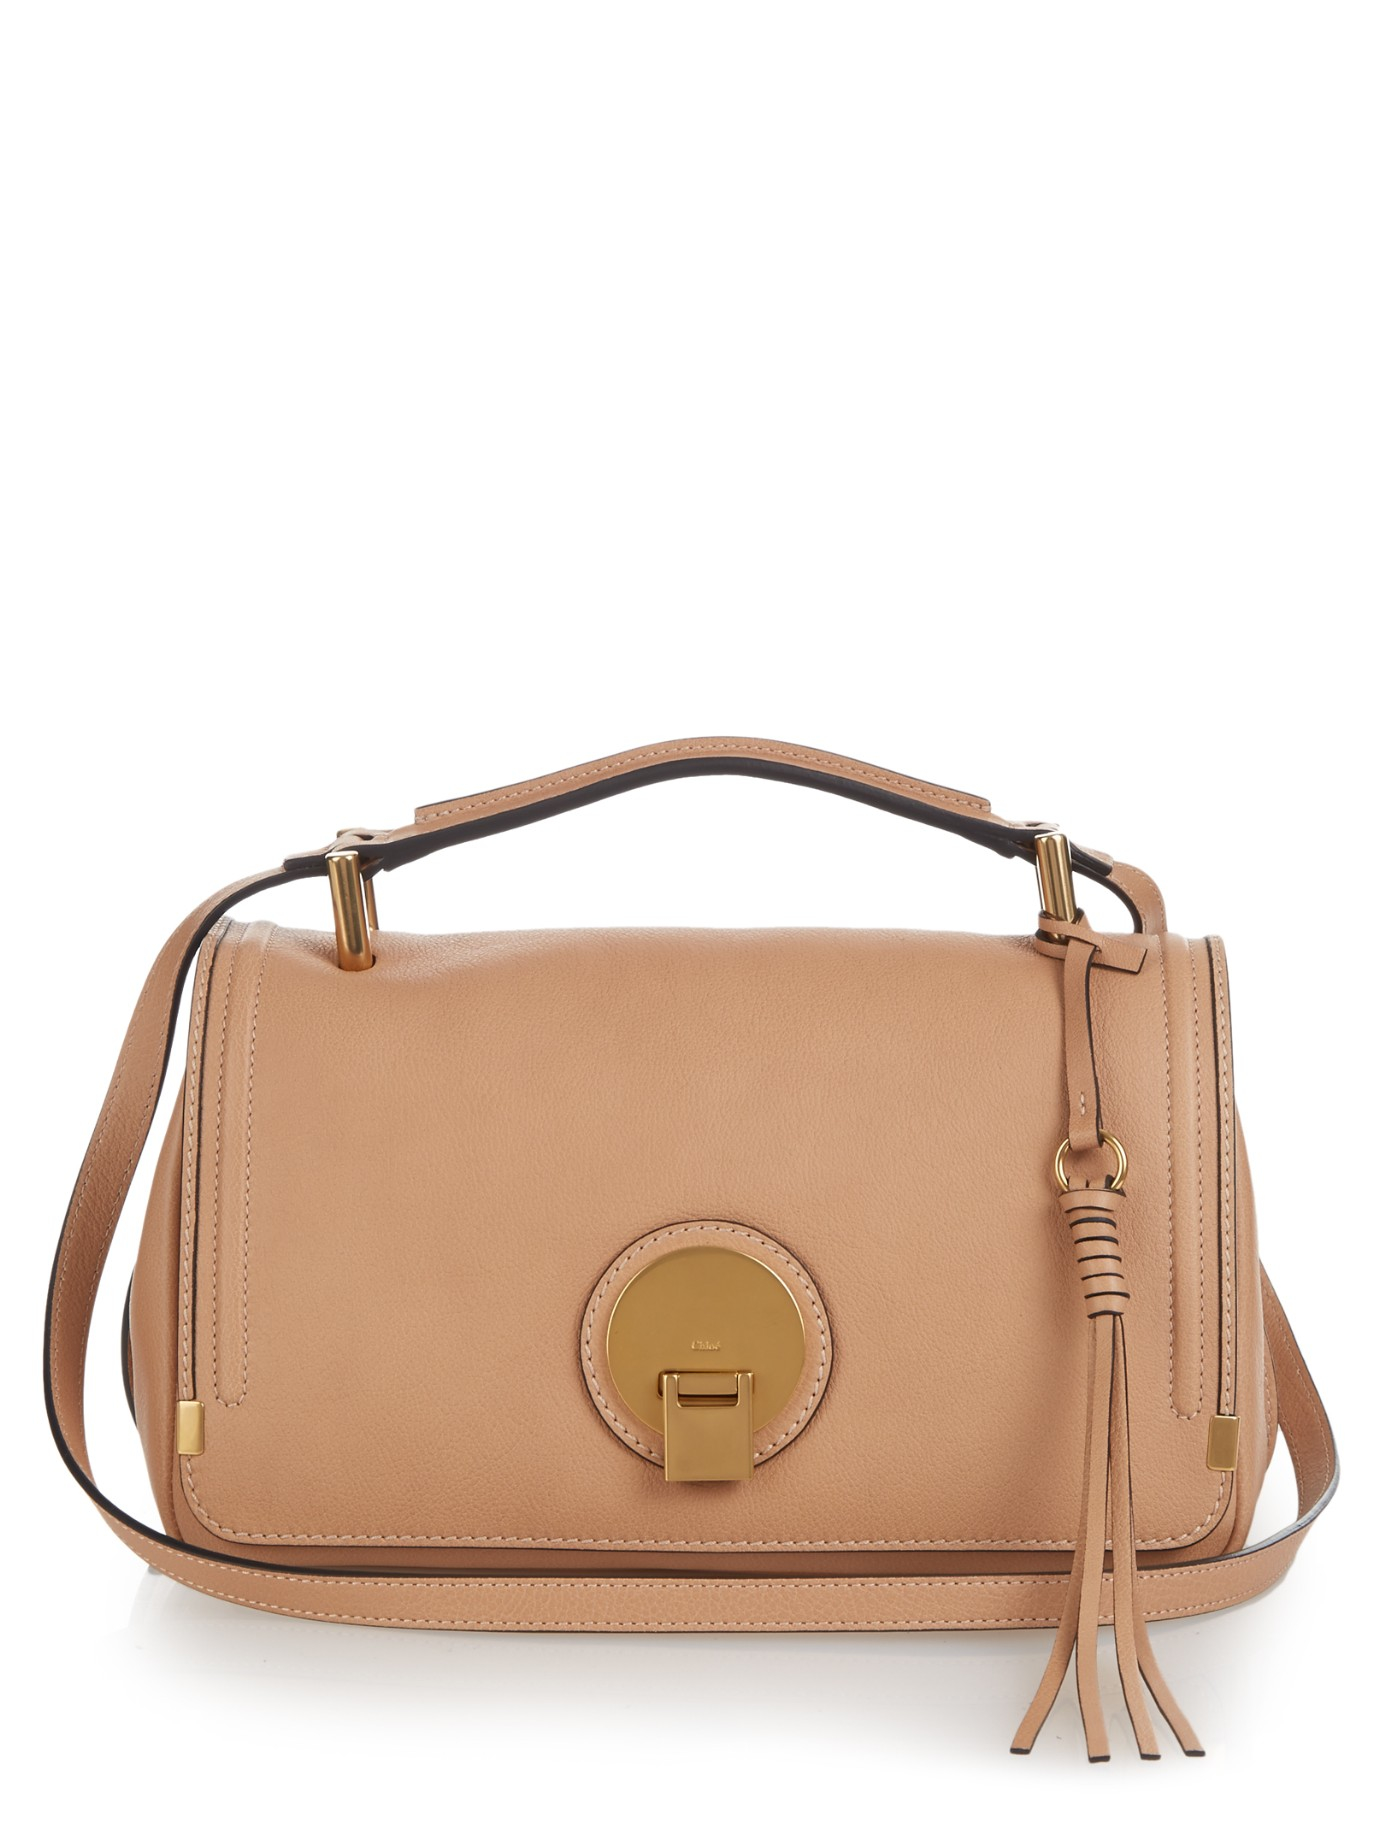 Chlo Indy Medium Leather Shoulder Bag in Brown (BEIGE) | Lyst